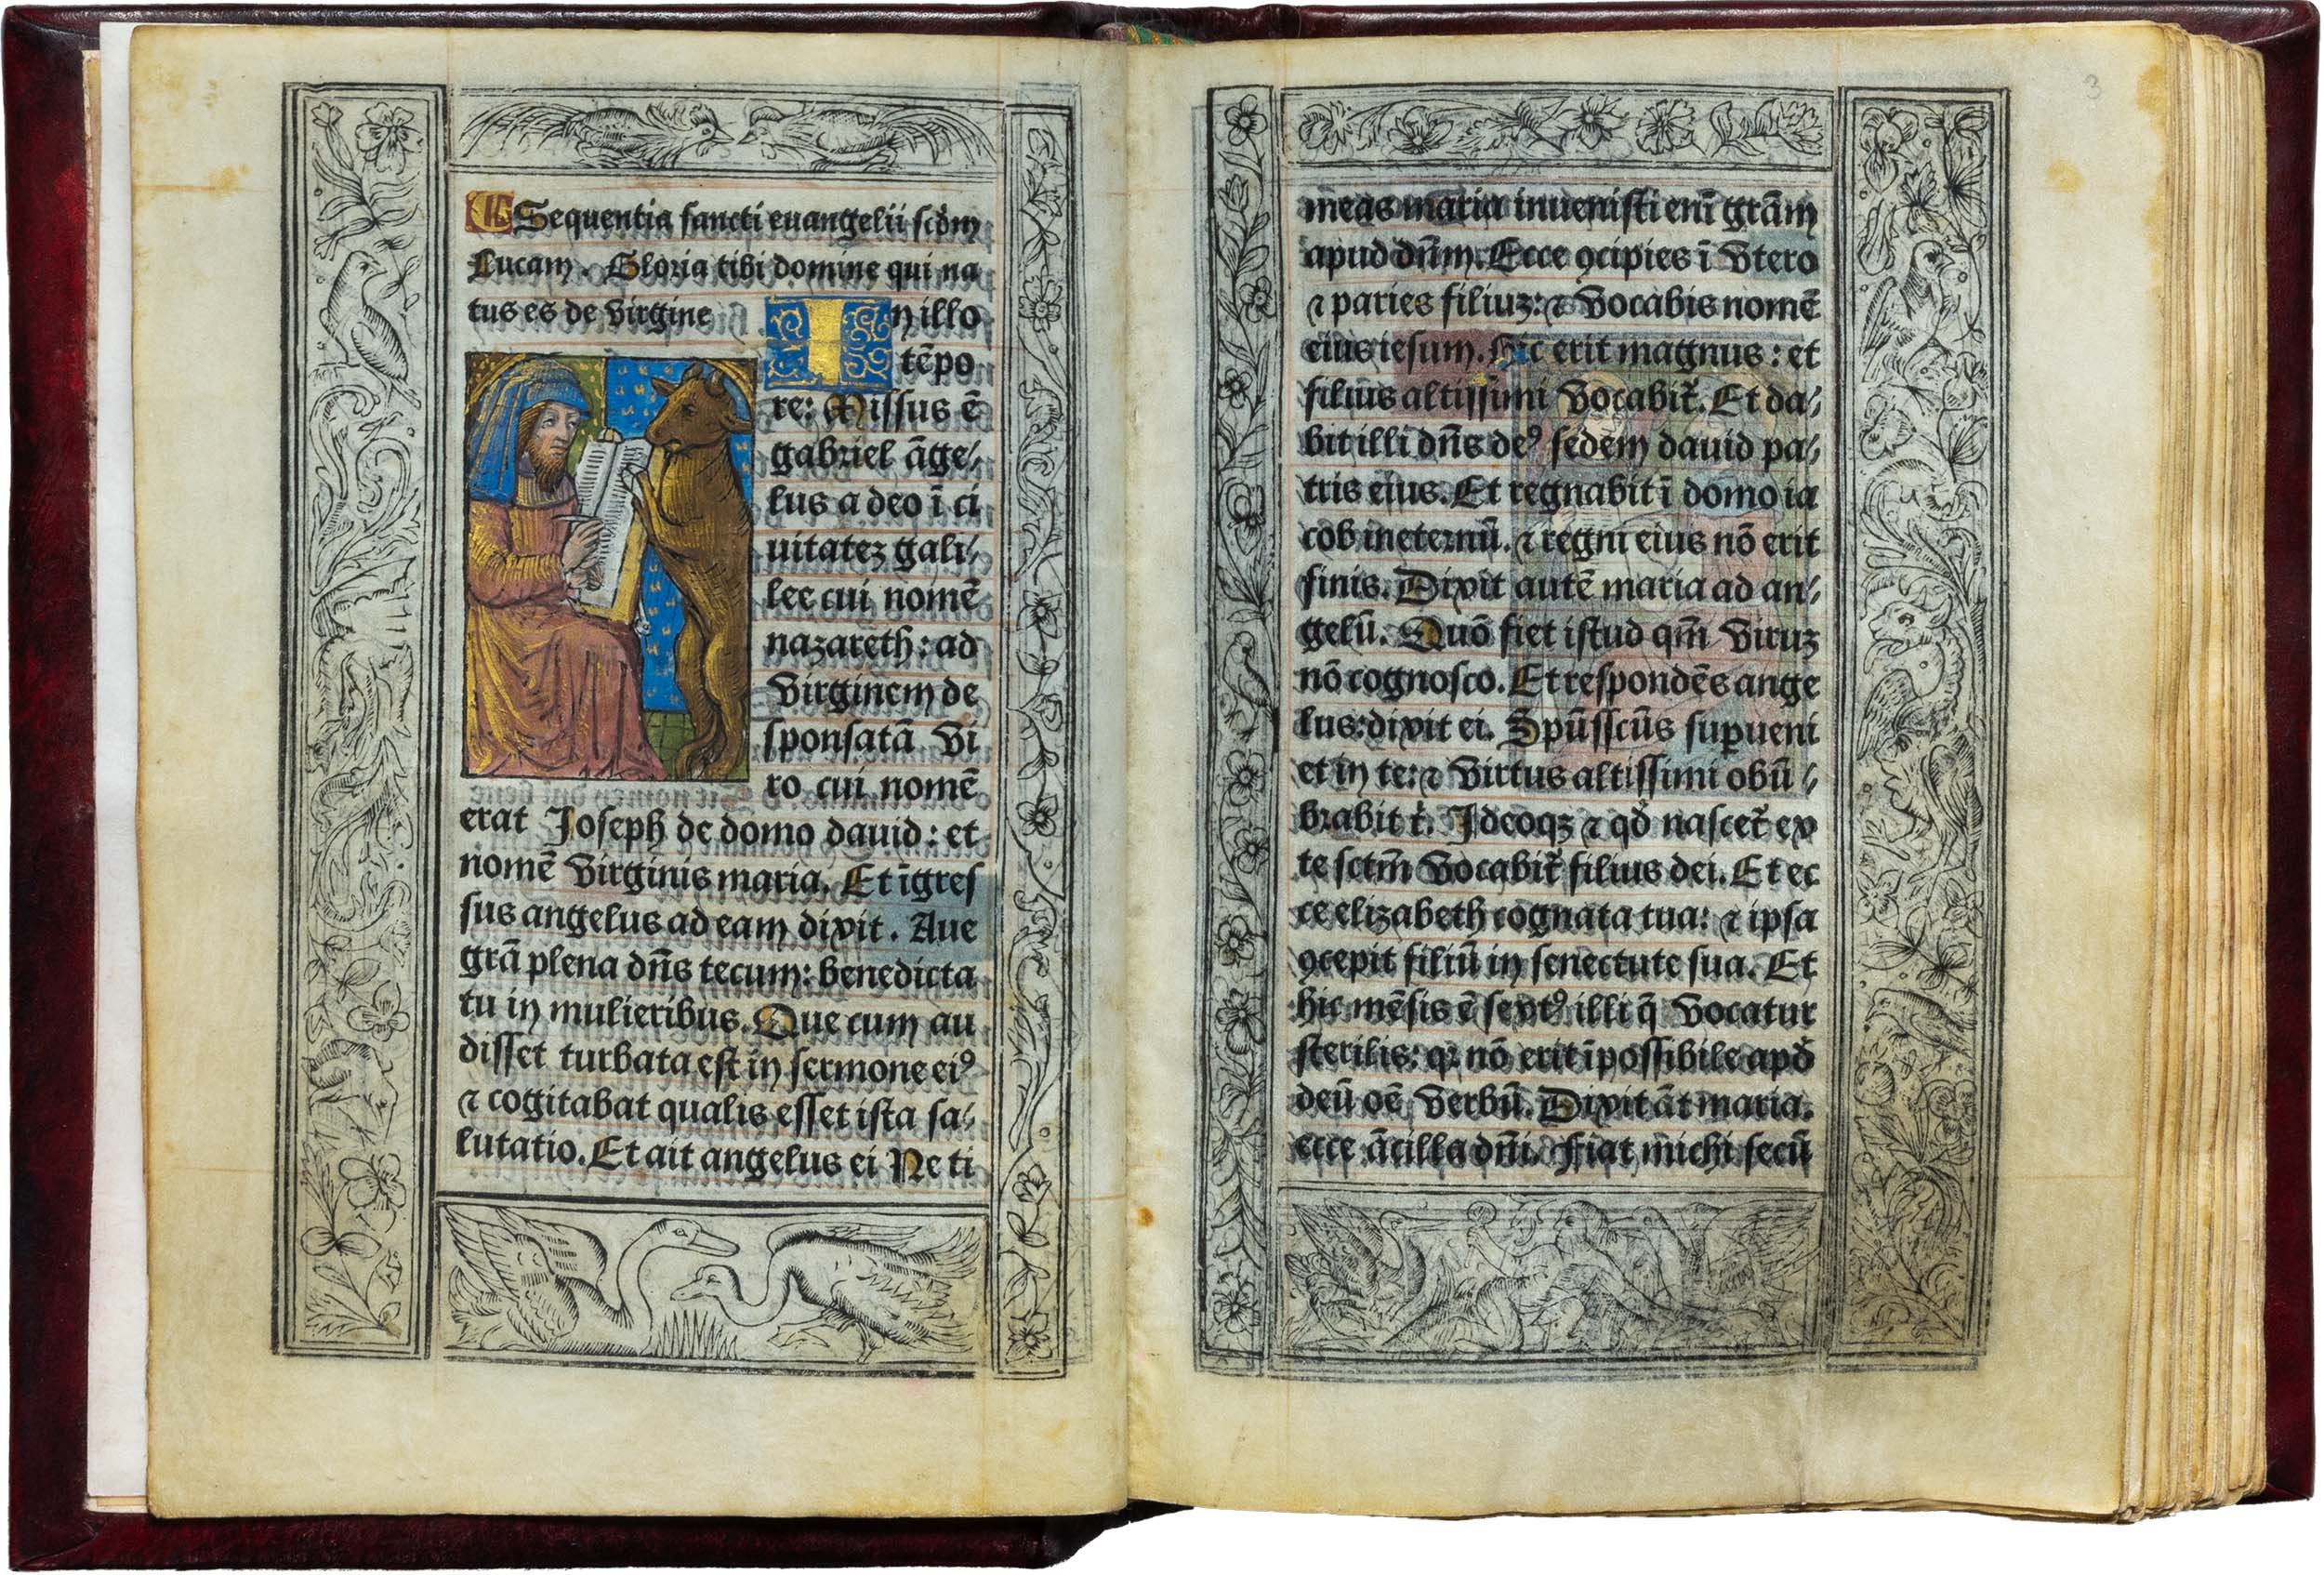 horae-bmv-early-printed-book-of-hours-1487-dupre-05.jpg